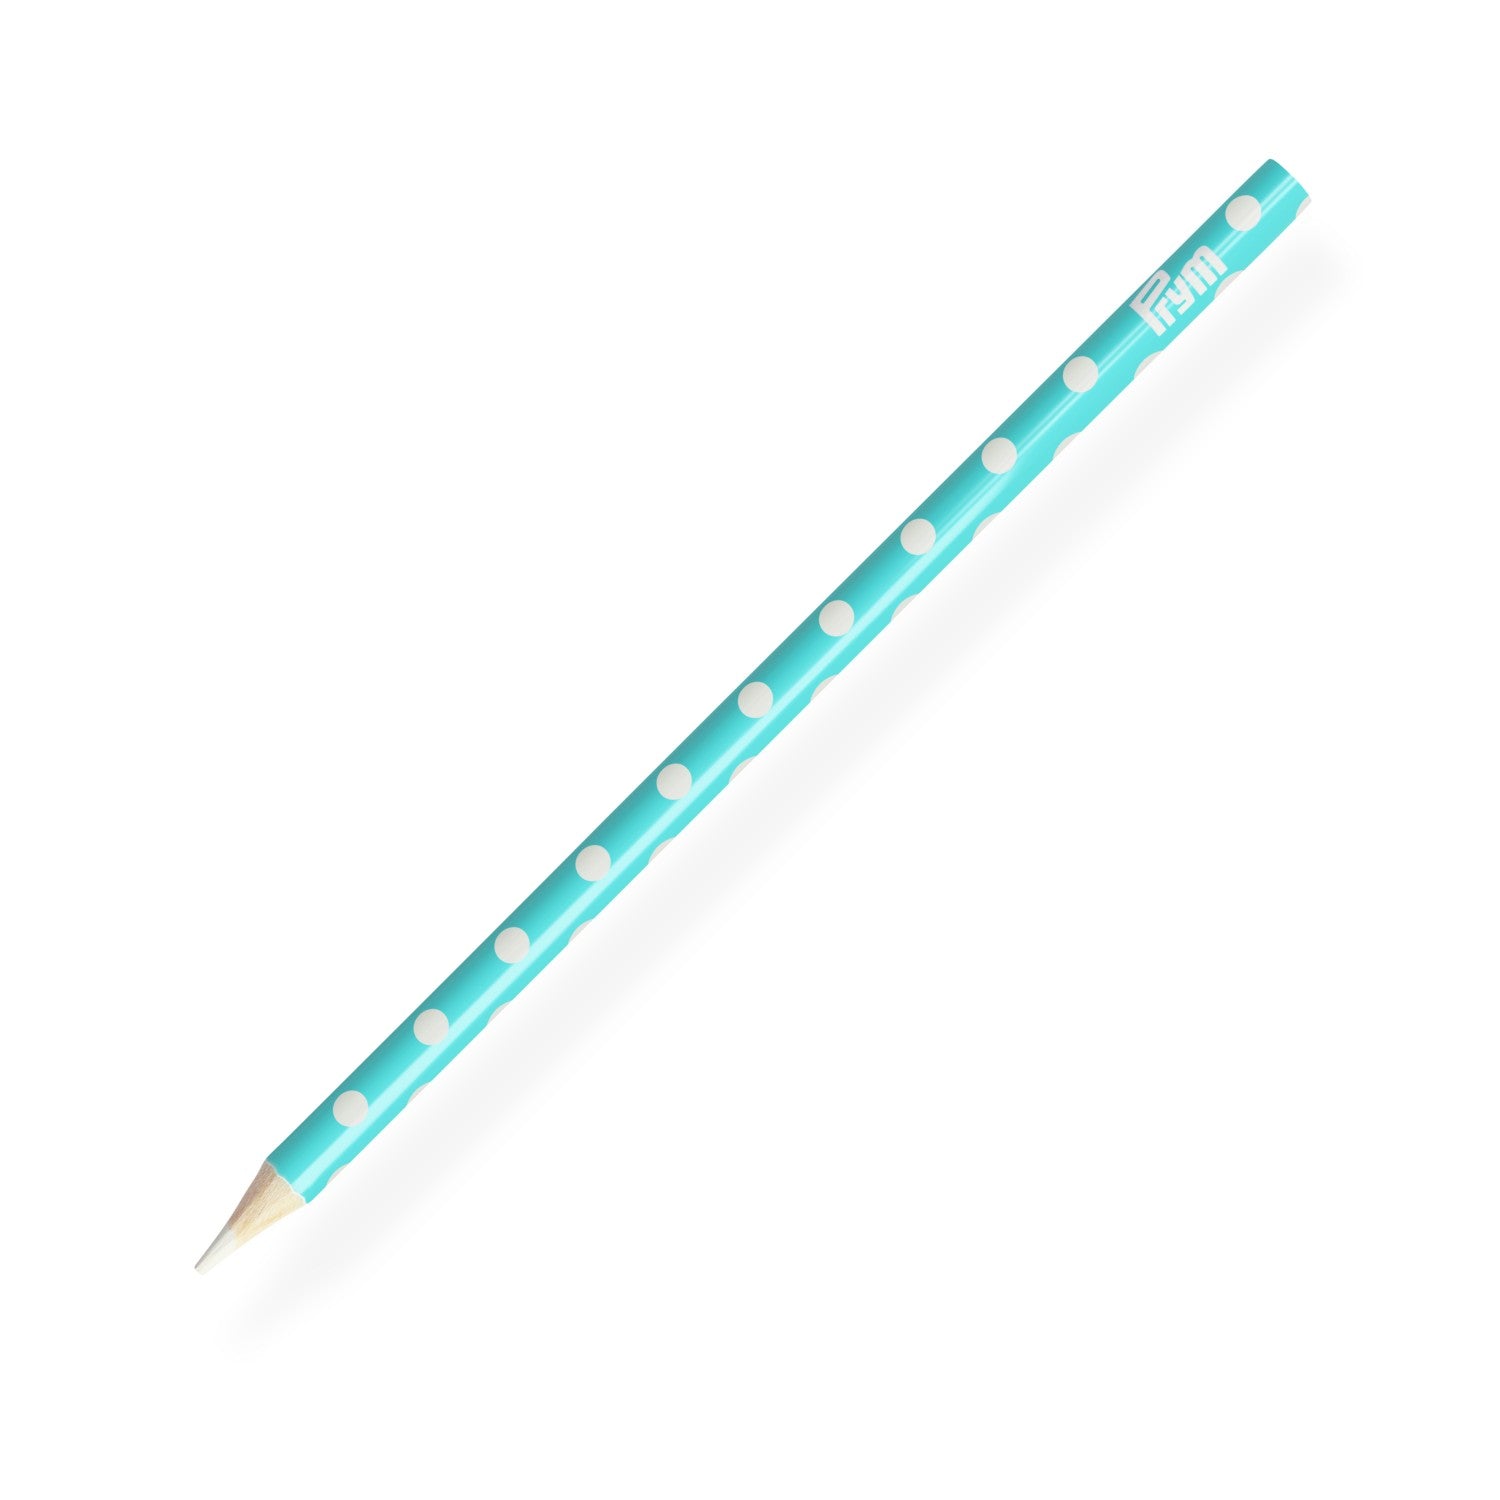 Prym Love Fabric Marking Pencil - White Lead (turquoise)